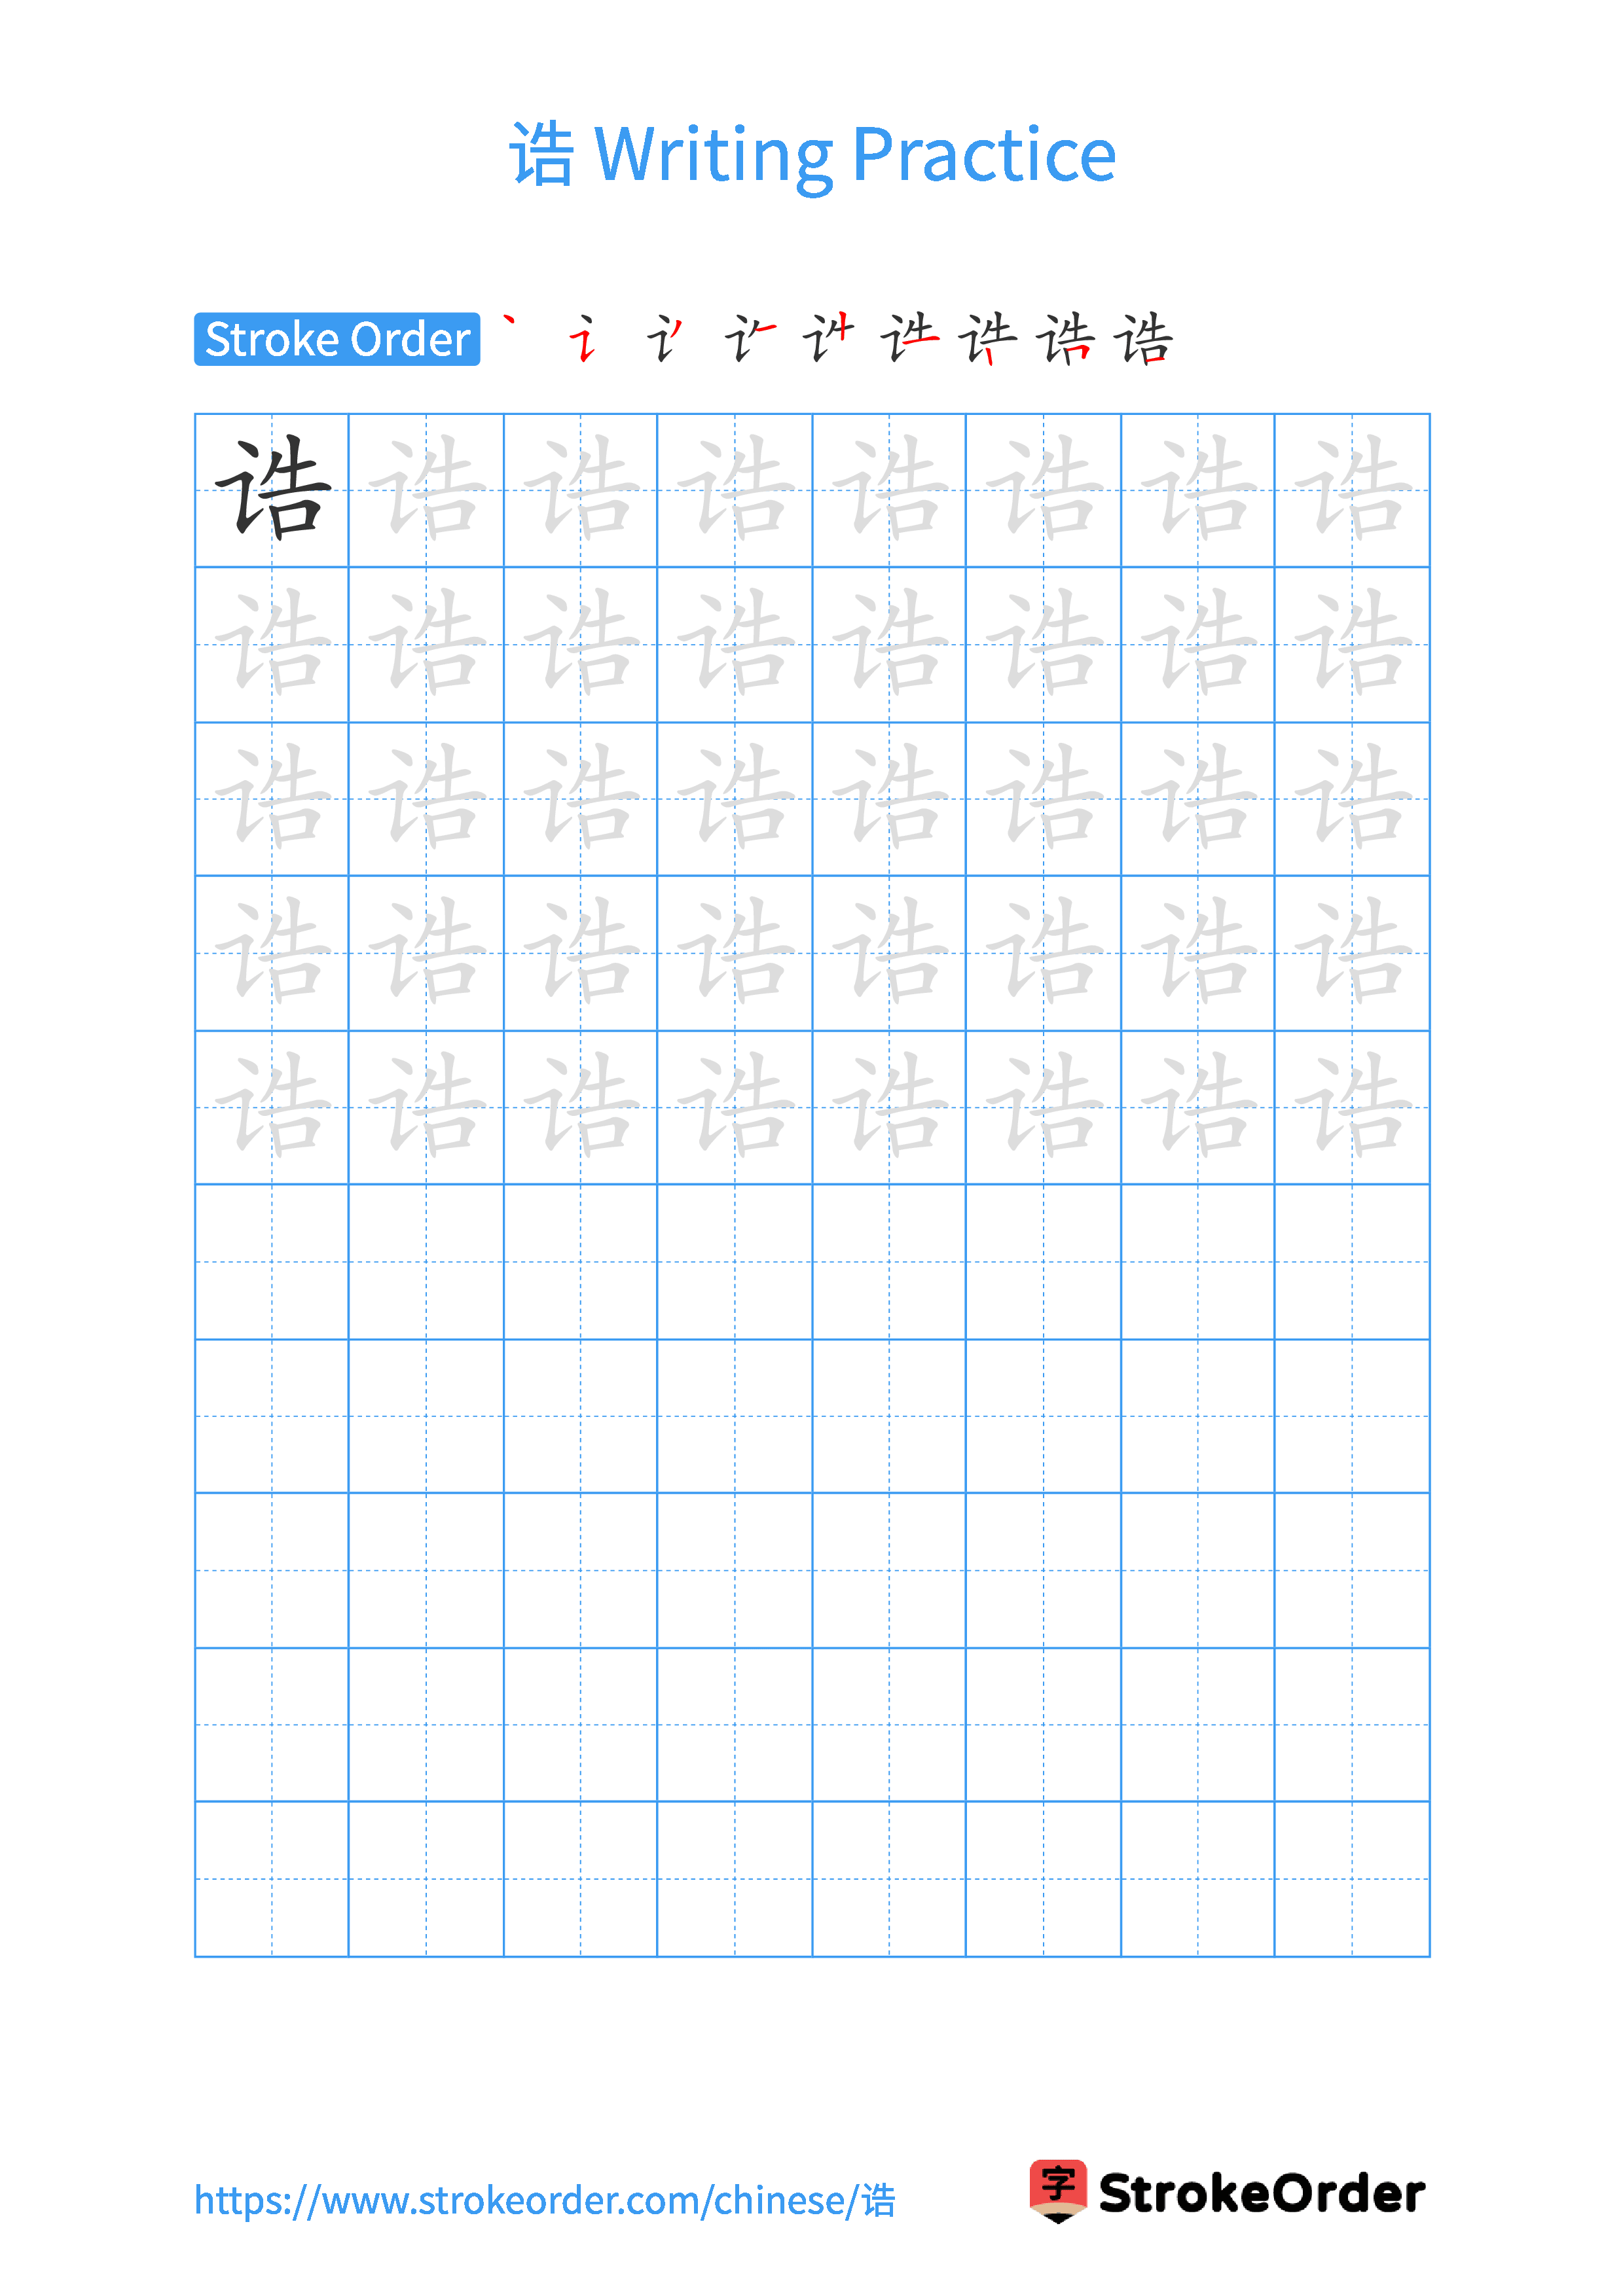 Printable Handwriting Practice Worksheet of the Chinese character 诰 in Portrait Orientation (Tian Zi Ge)